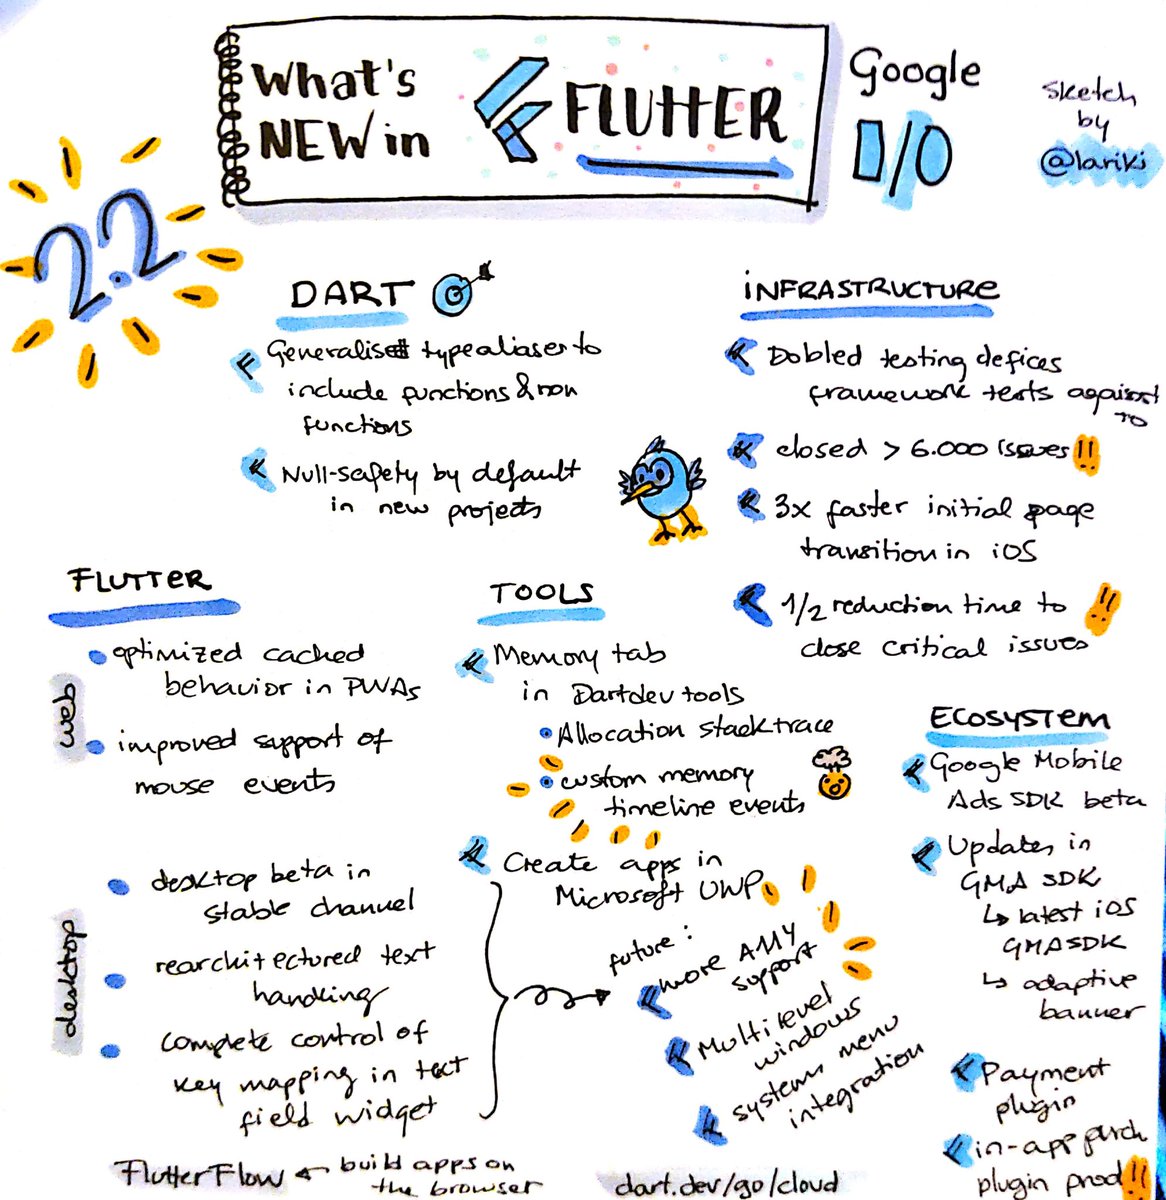 What's new in Flutter recap!

#GoogleIO #GoogleIO2021 #Flutter #flutterdev #sketchnotes #Sketchnoting